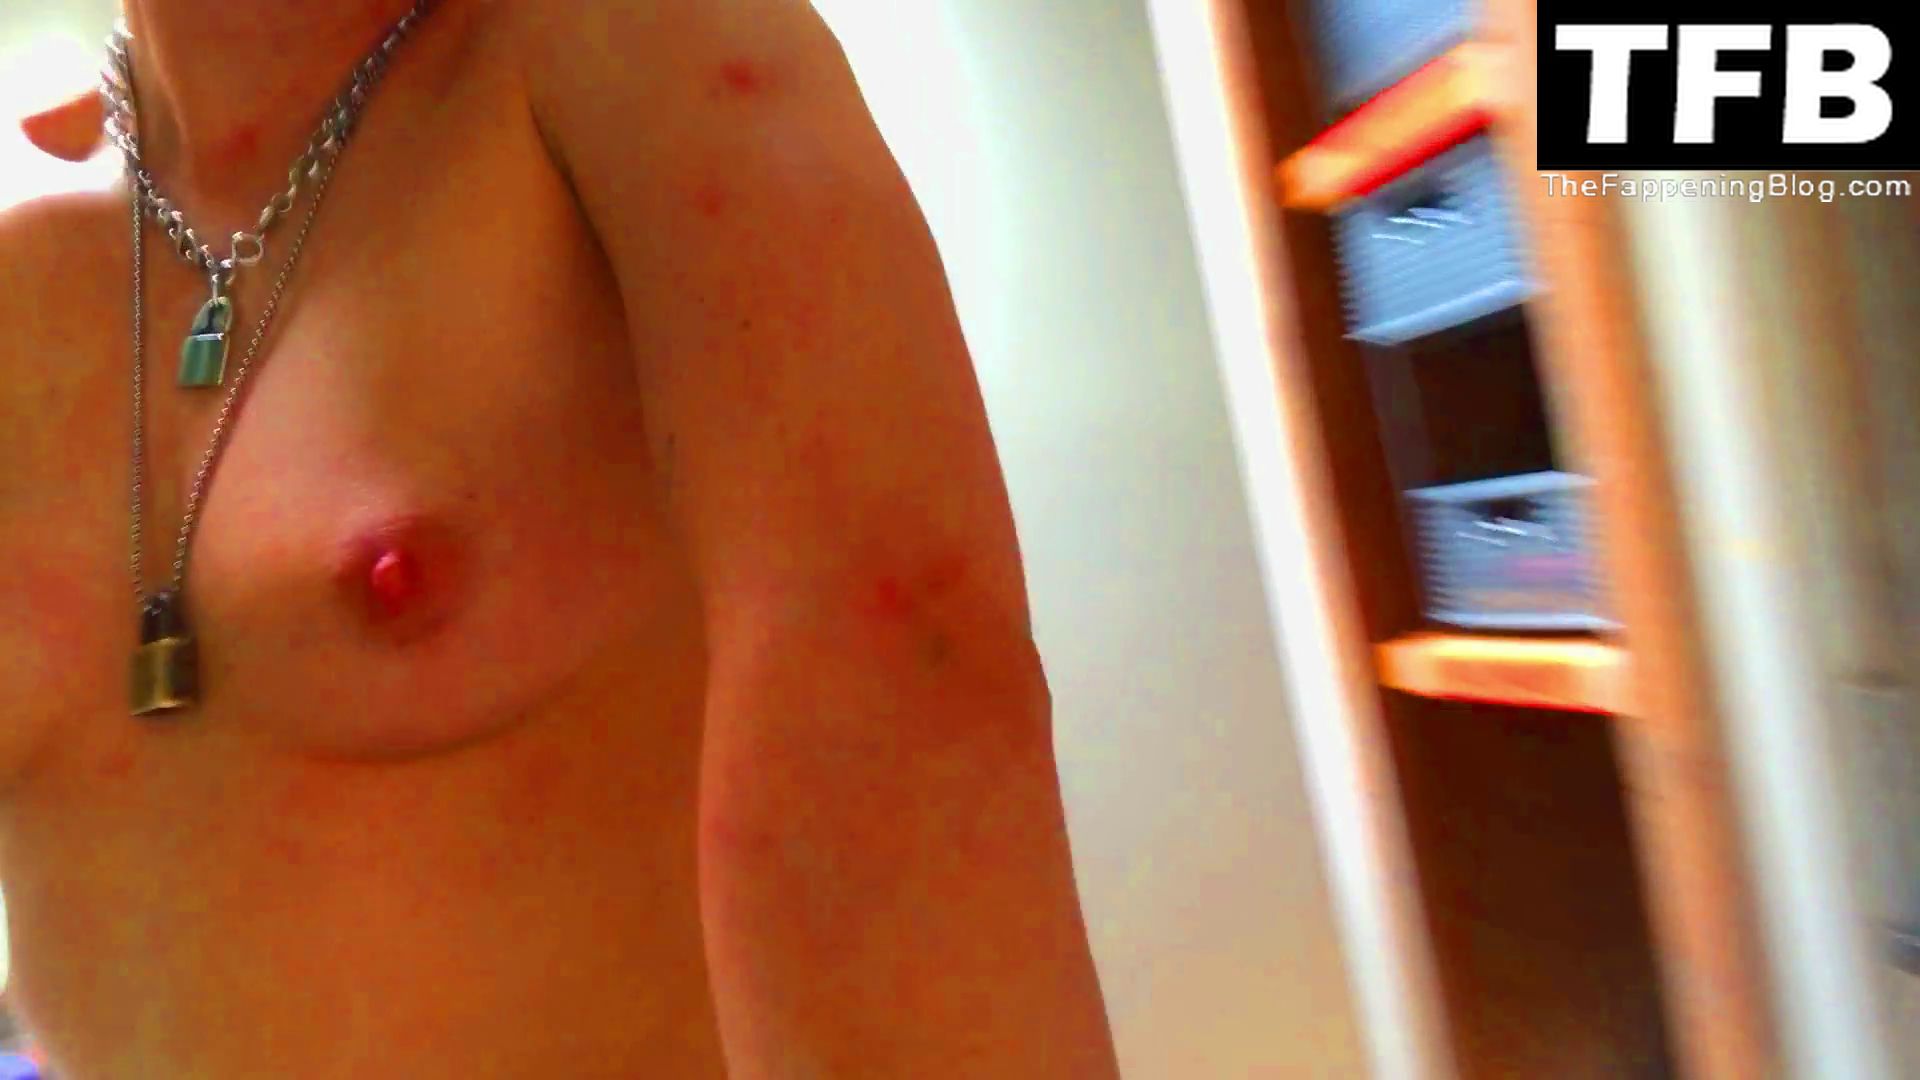 Kristen-Stewart-Nude-Leaked-The-Fappening-Blog-56.jpg